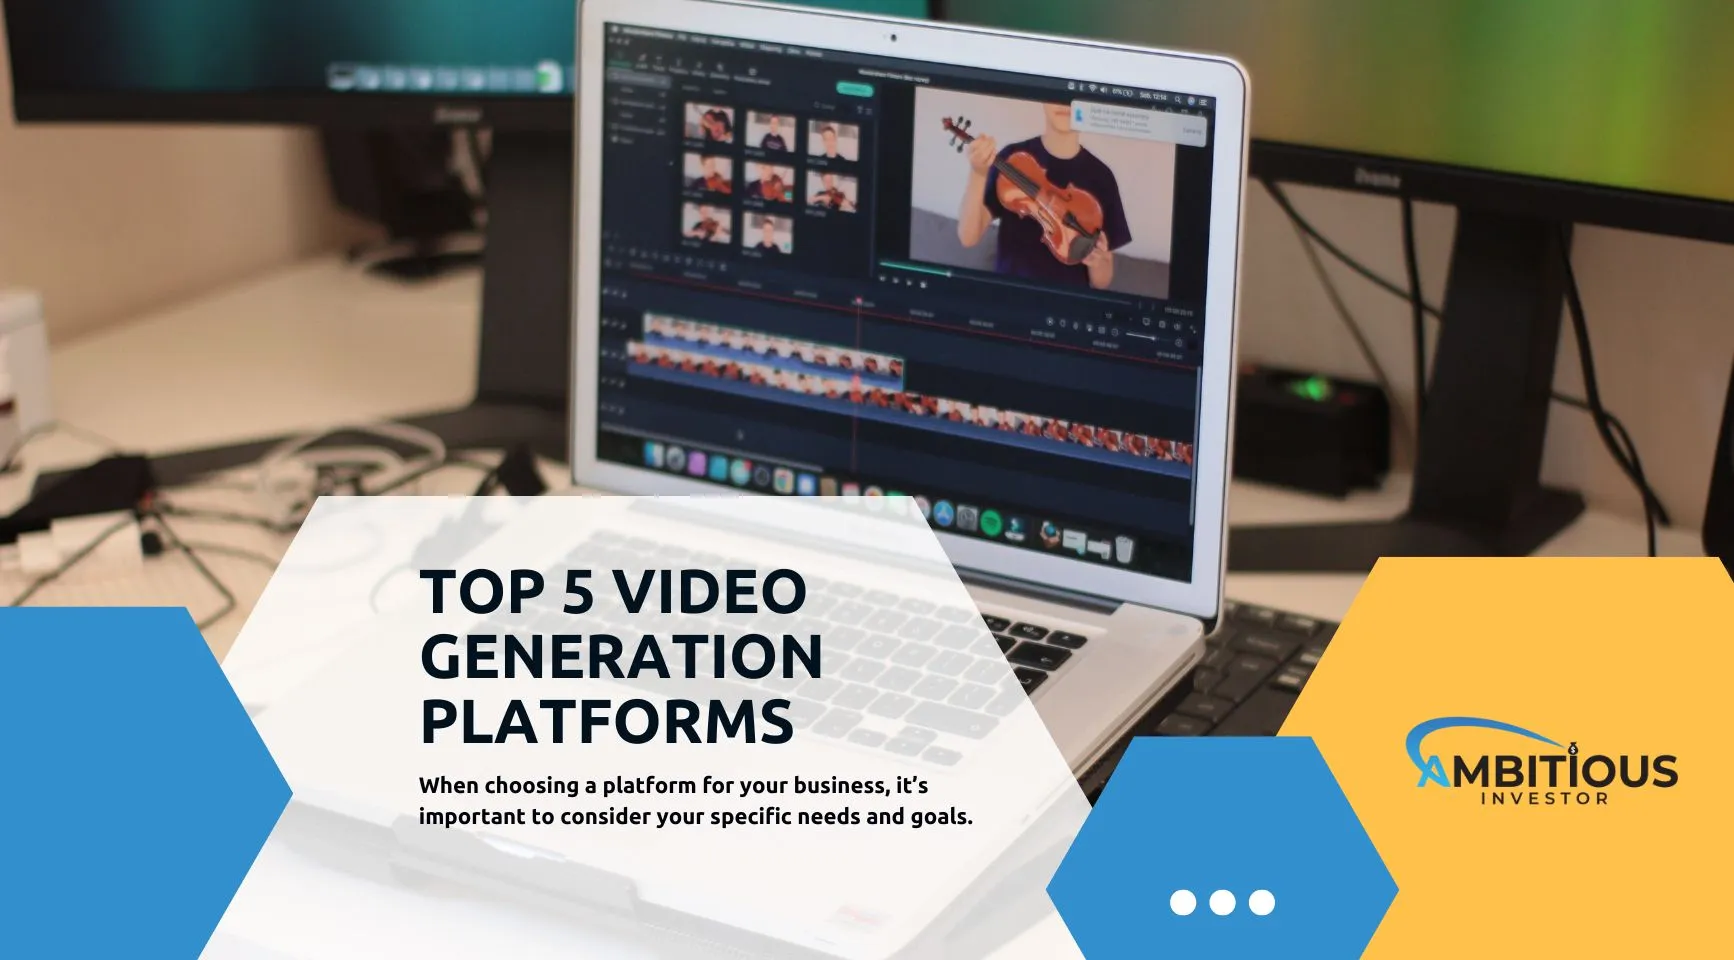 Top 5 Video Generation Platforms | Ambitious Investor